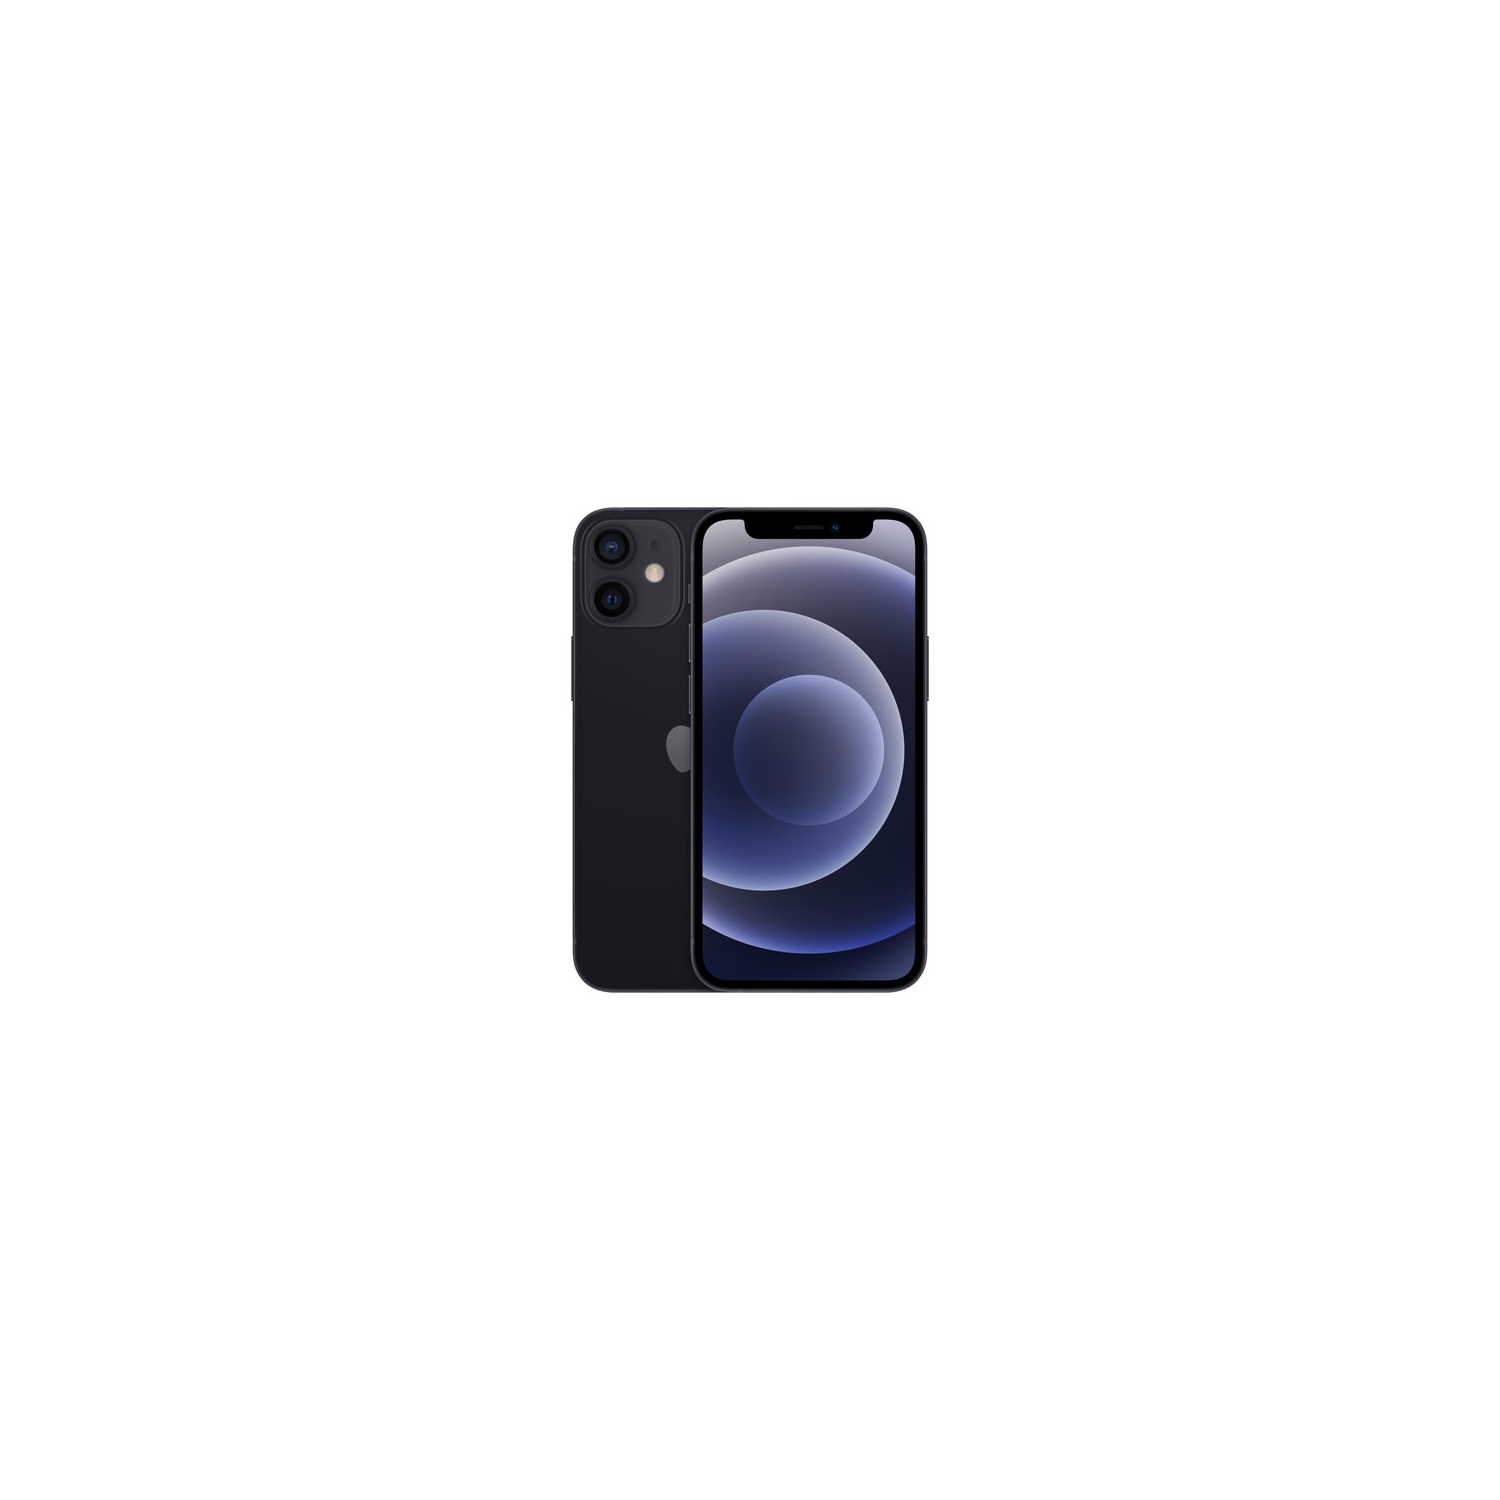 Apple iPhone 12 mini 64GB Smartphone - White - Unlocked - Open Box